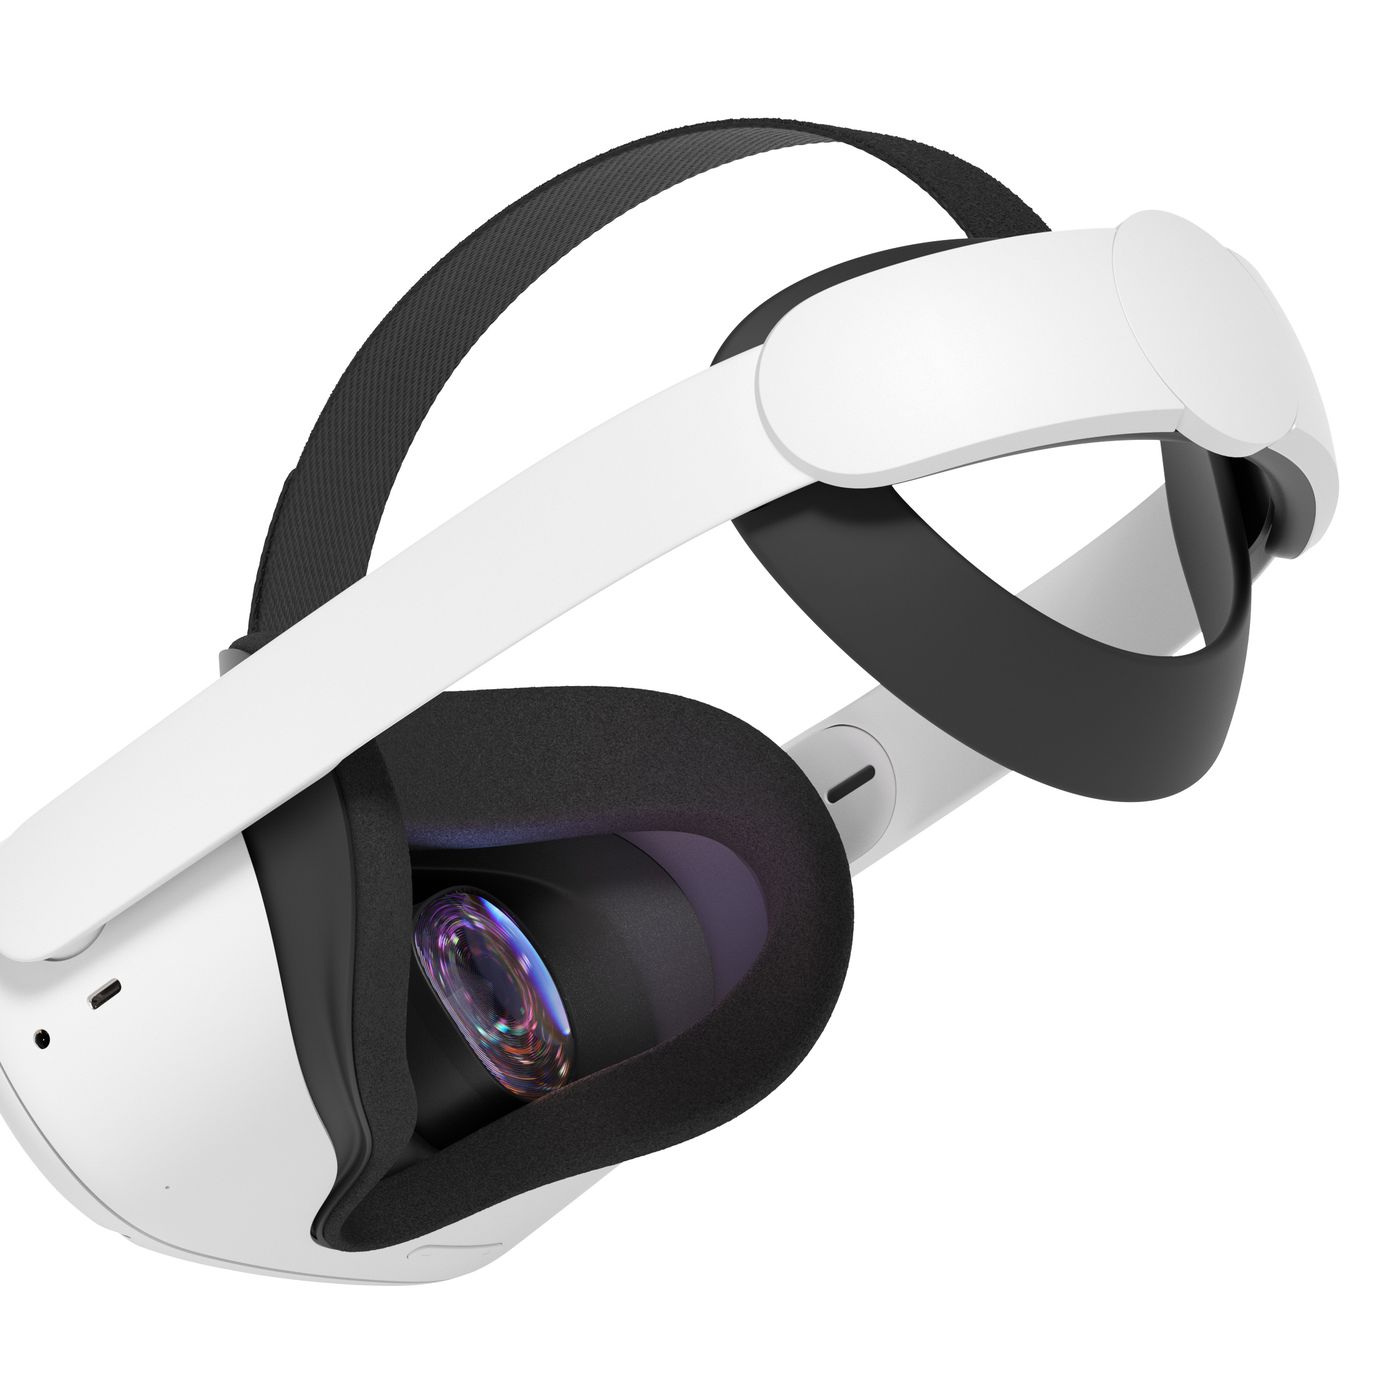 Bluetooth Headphones Oculus Quest 2 - Wireless Audio Excellence For Oculus Quest 2